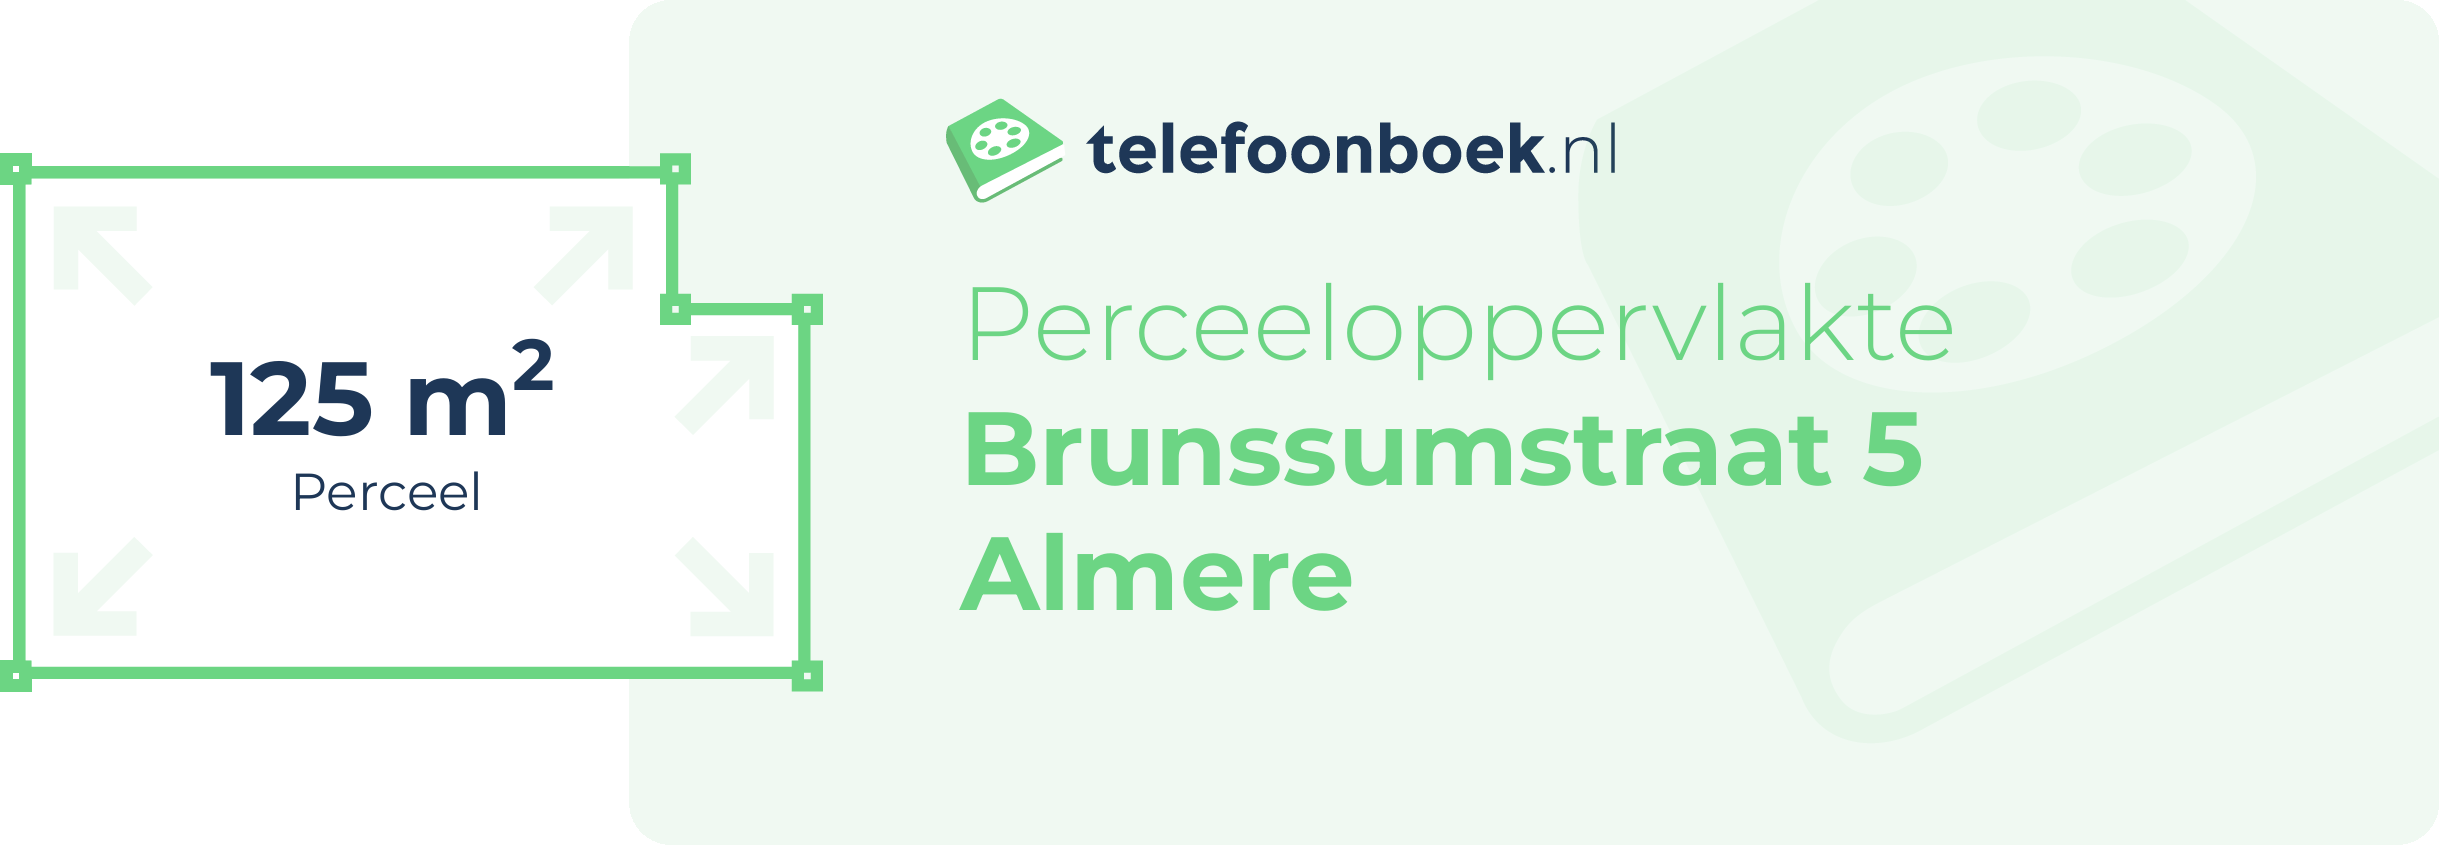 Perceeloppervlakte Brunssumstraat 5 Almere